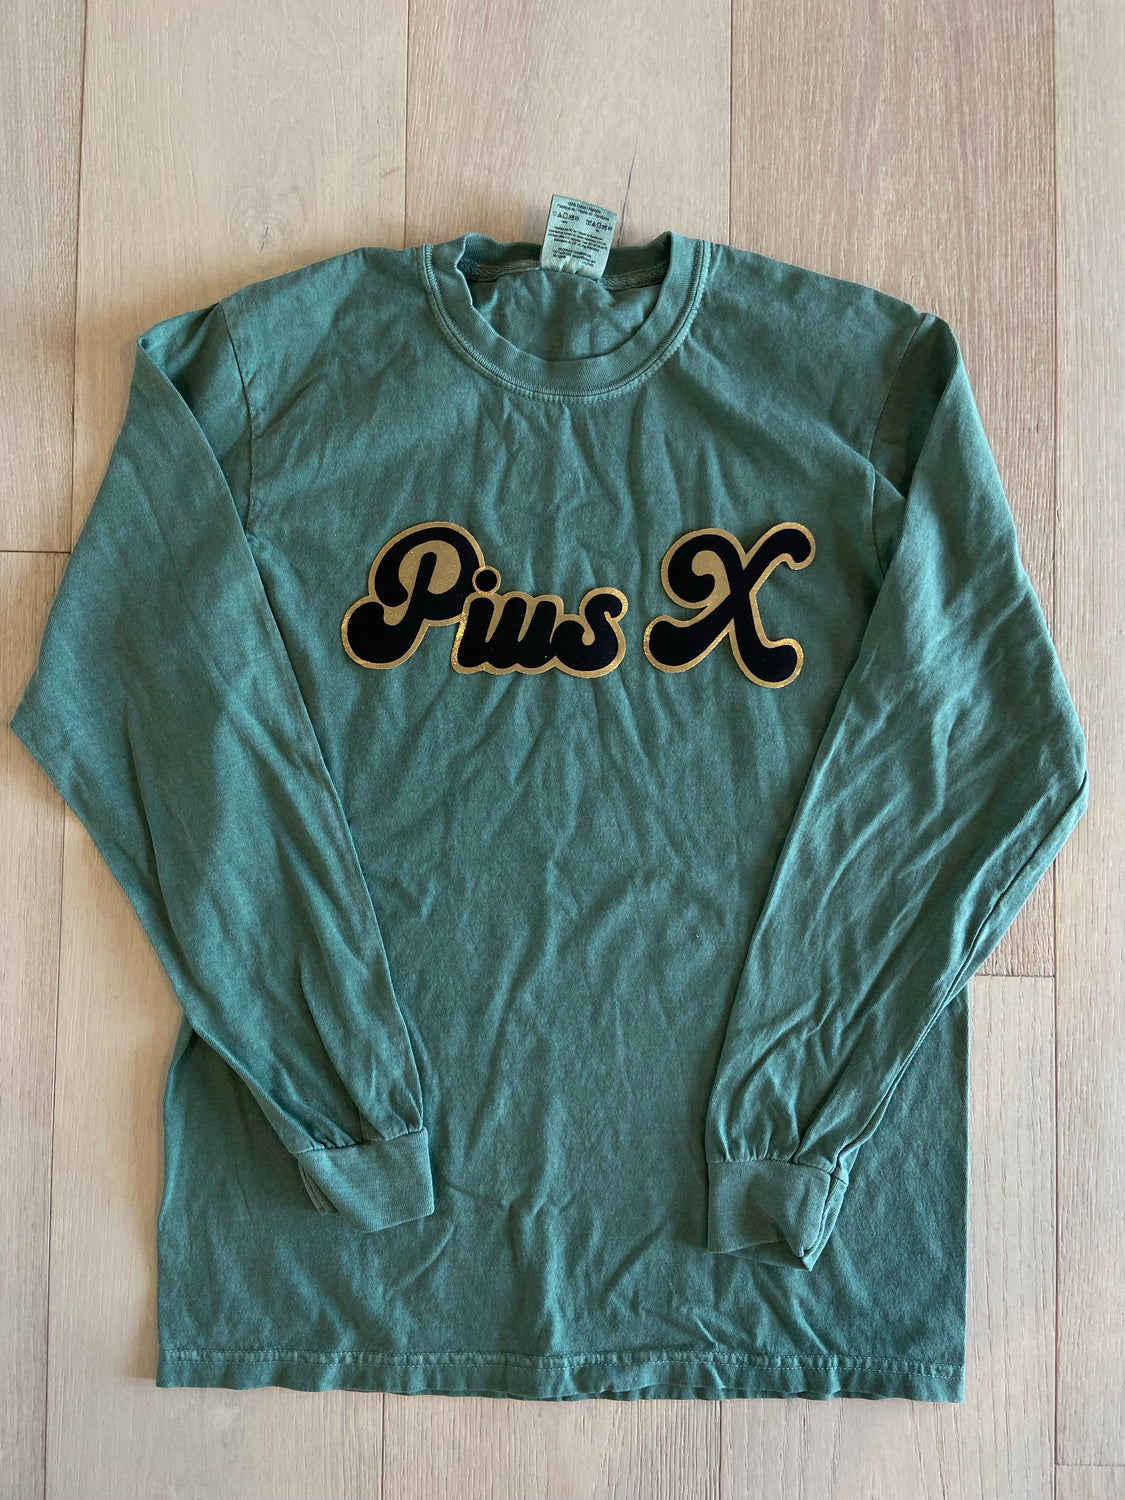 PIUS X - HUNTER GREEN LONG SLEEVE